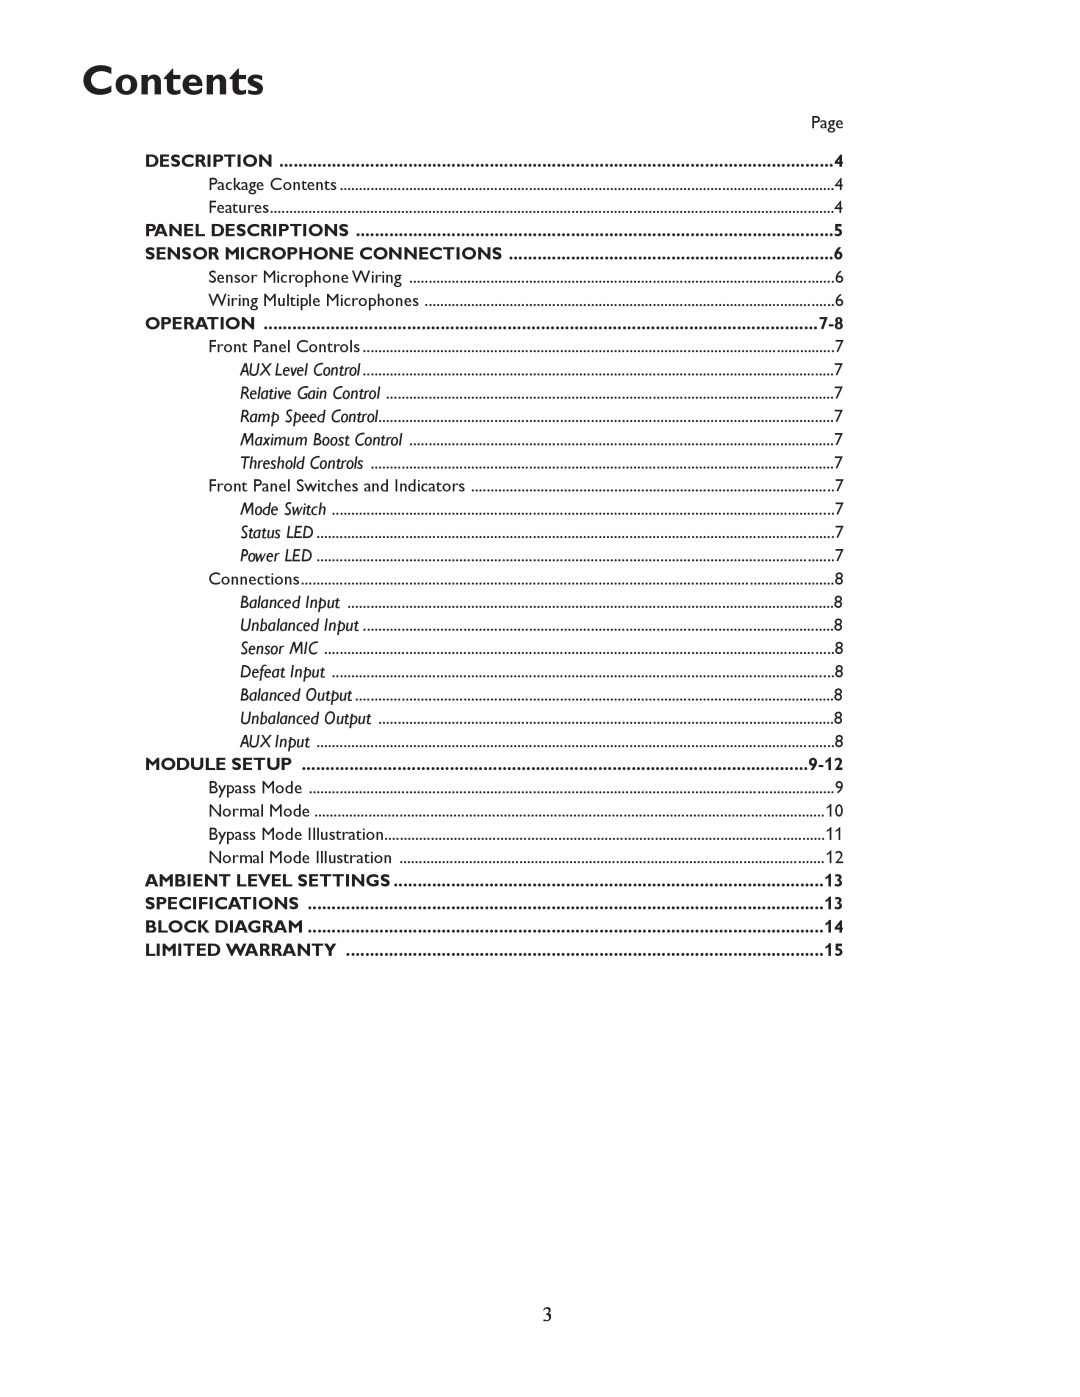 Bogen ANS501 specifications Contents, 9-12 